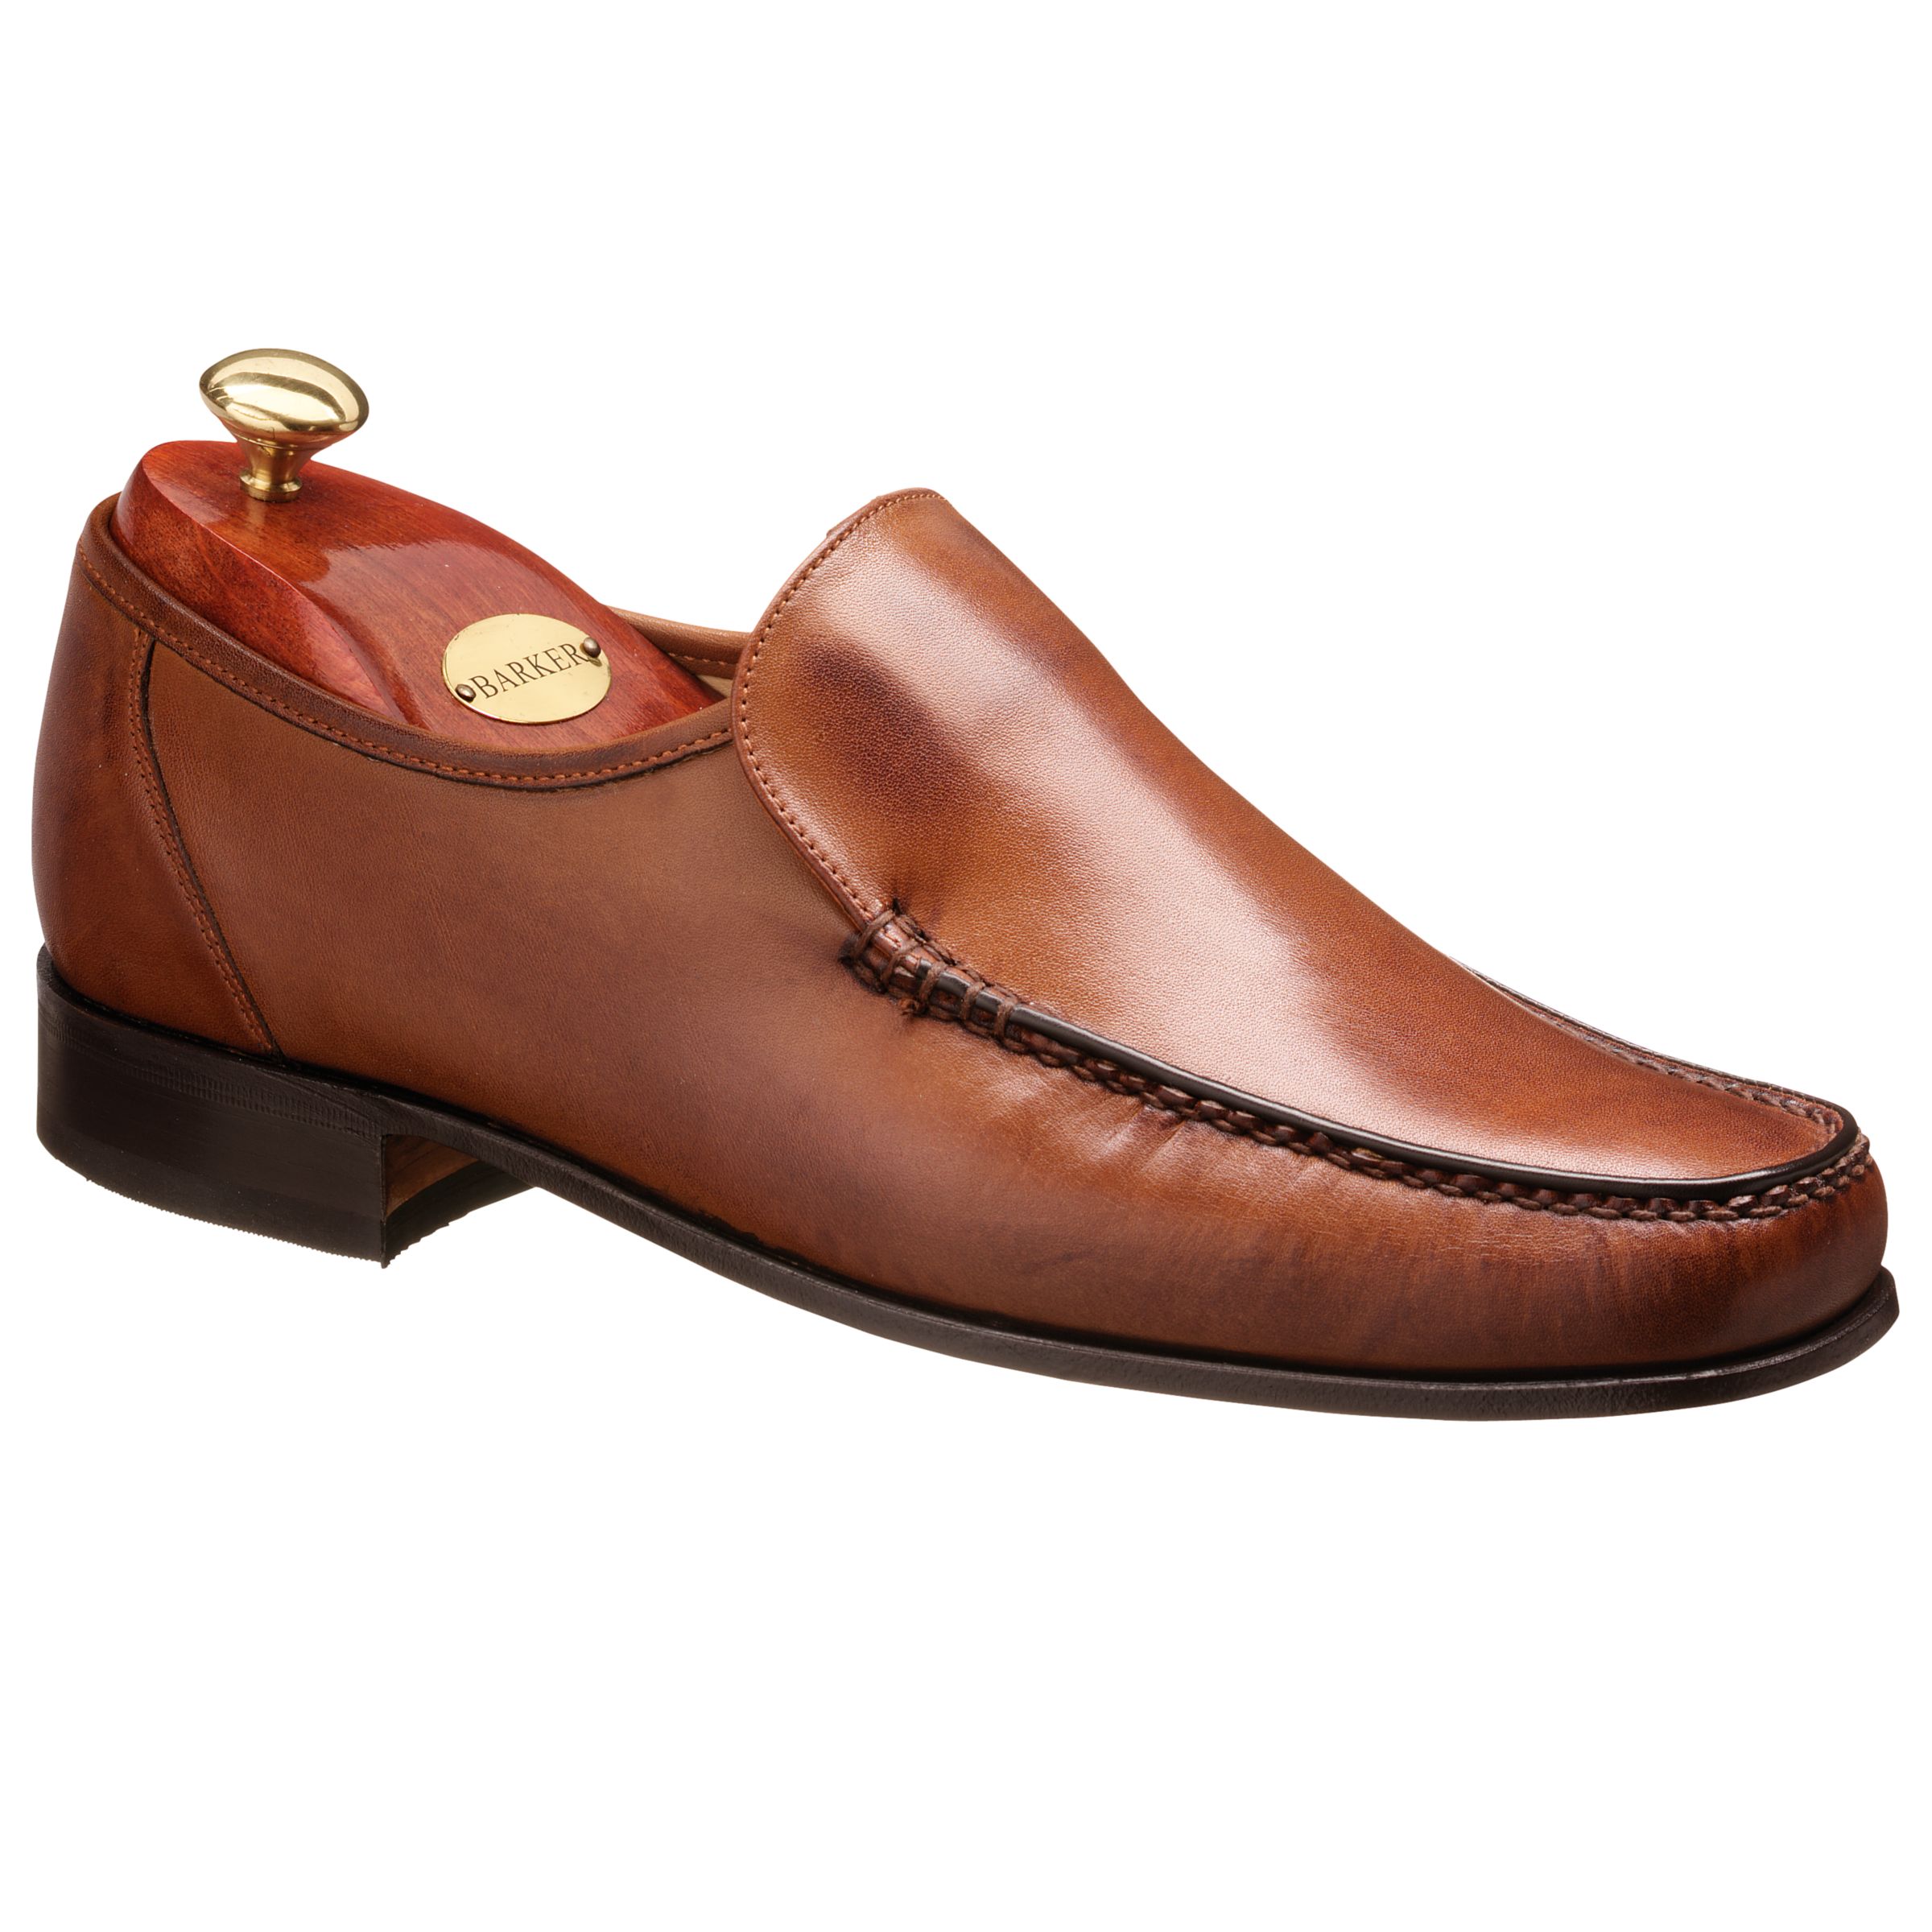 Barker Javron Moccasin Shoes, Brown at John Lewis